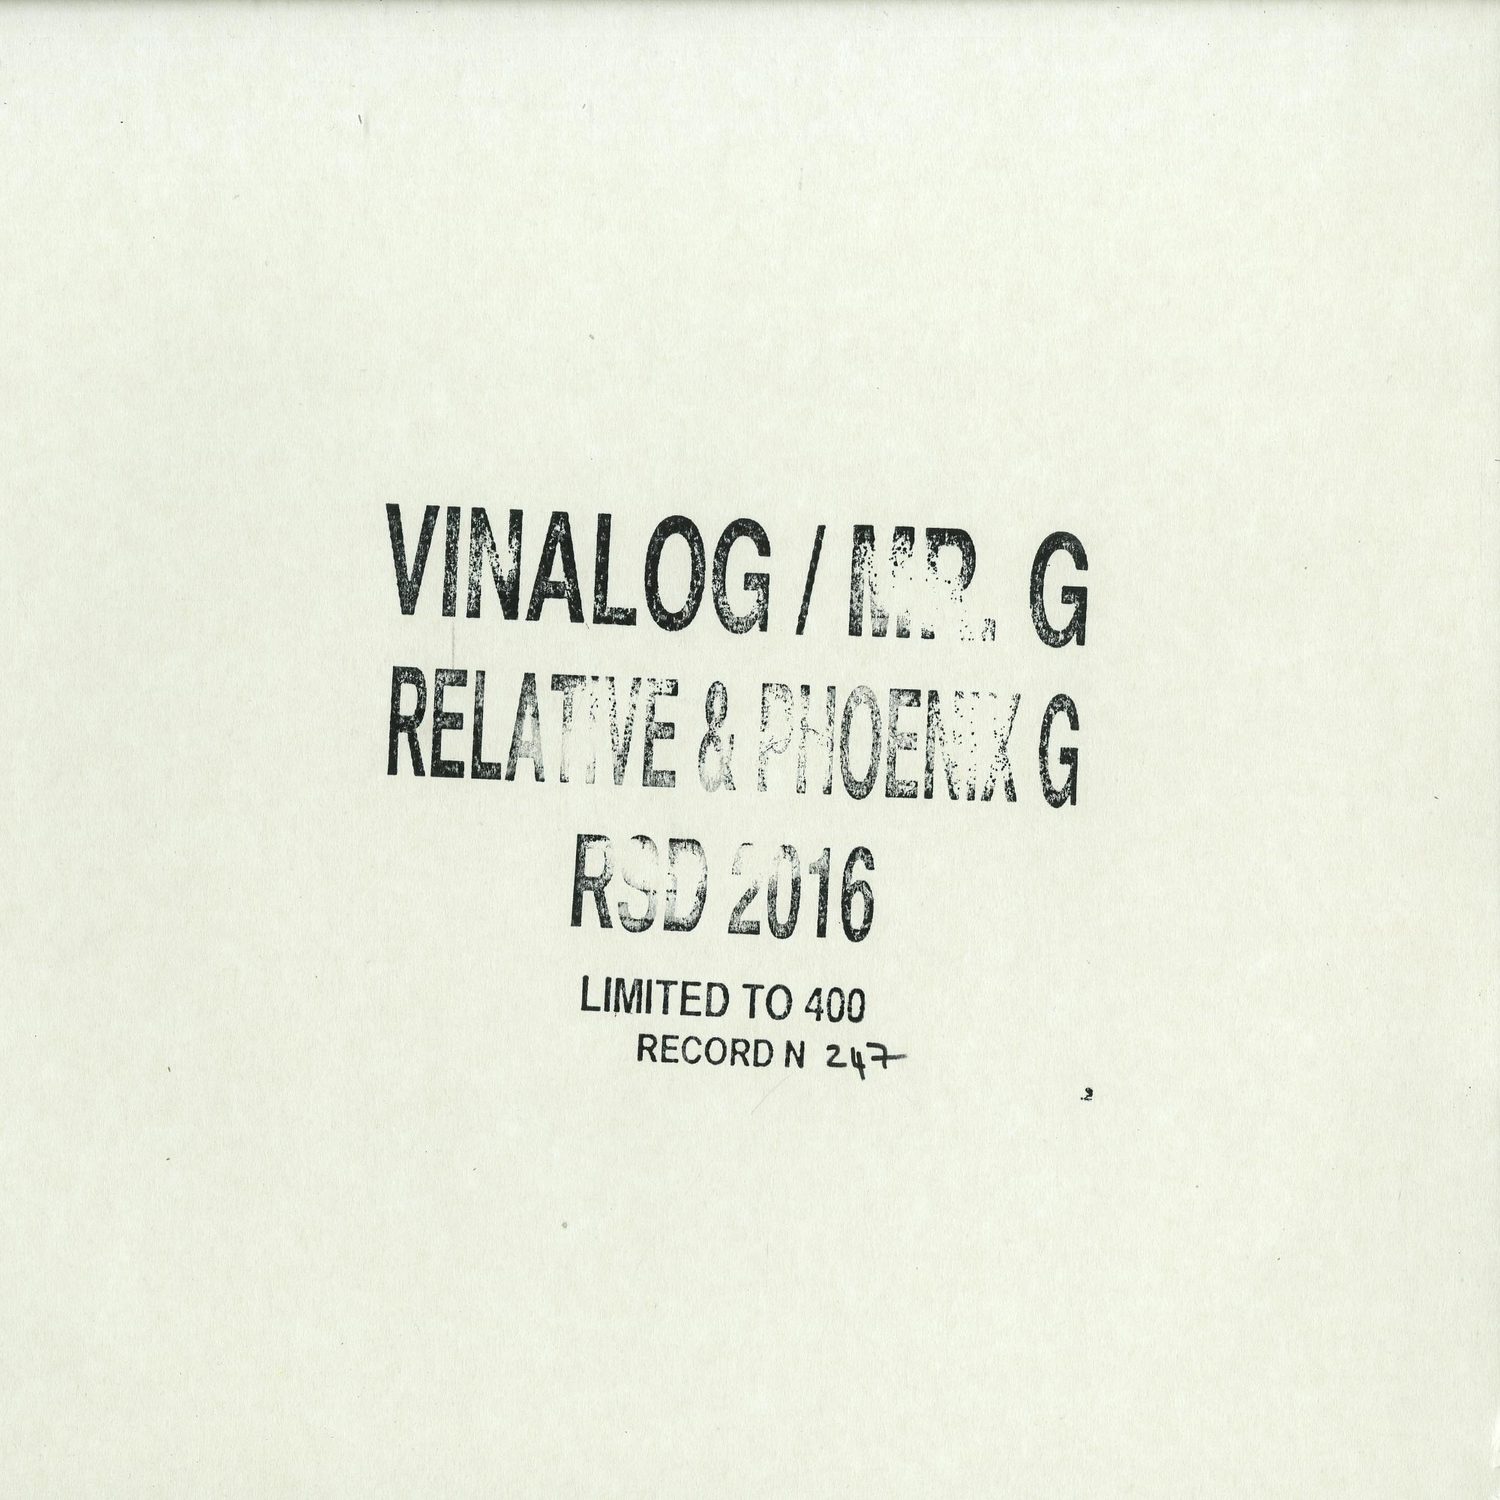 Vinalog / Mr. G - RELATIVE & PHOENIX G 004 